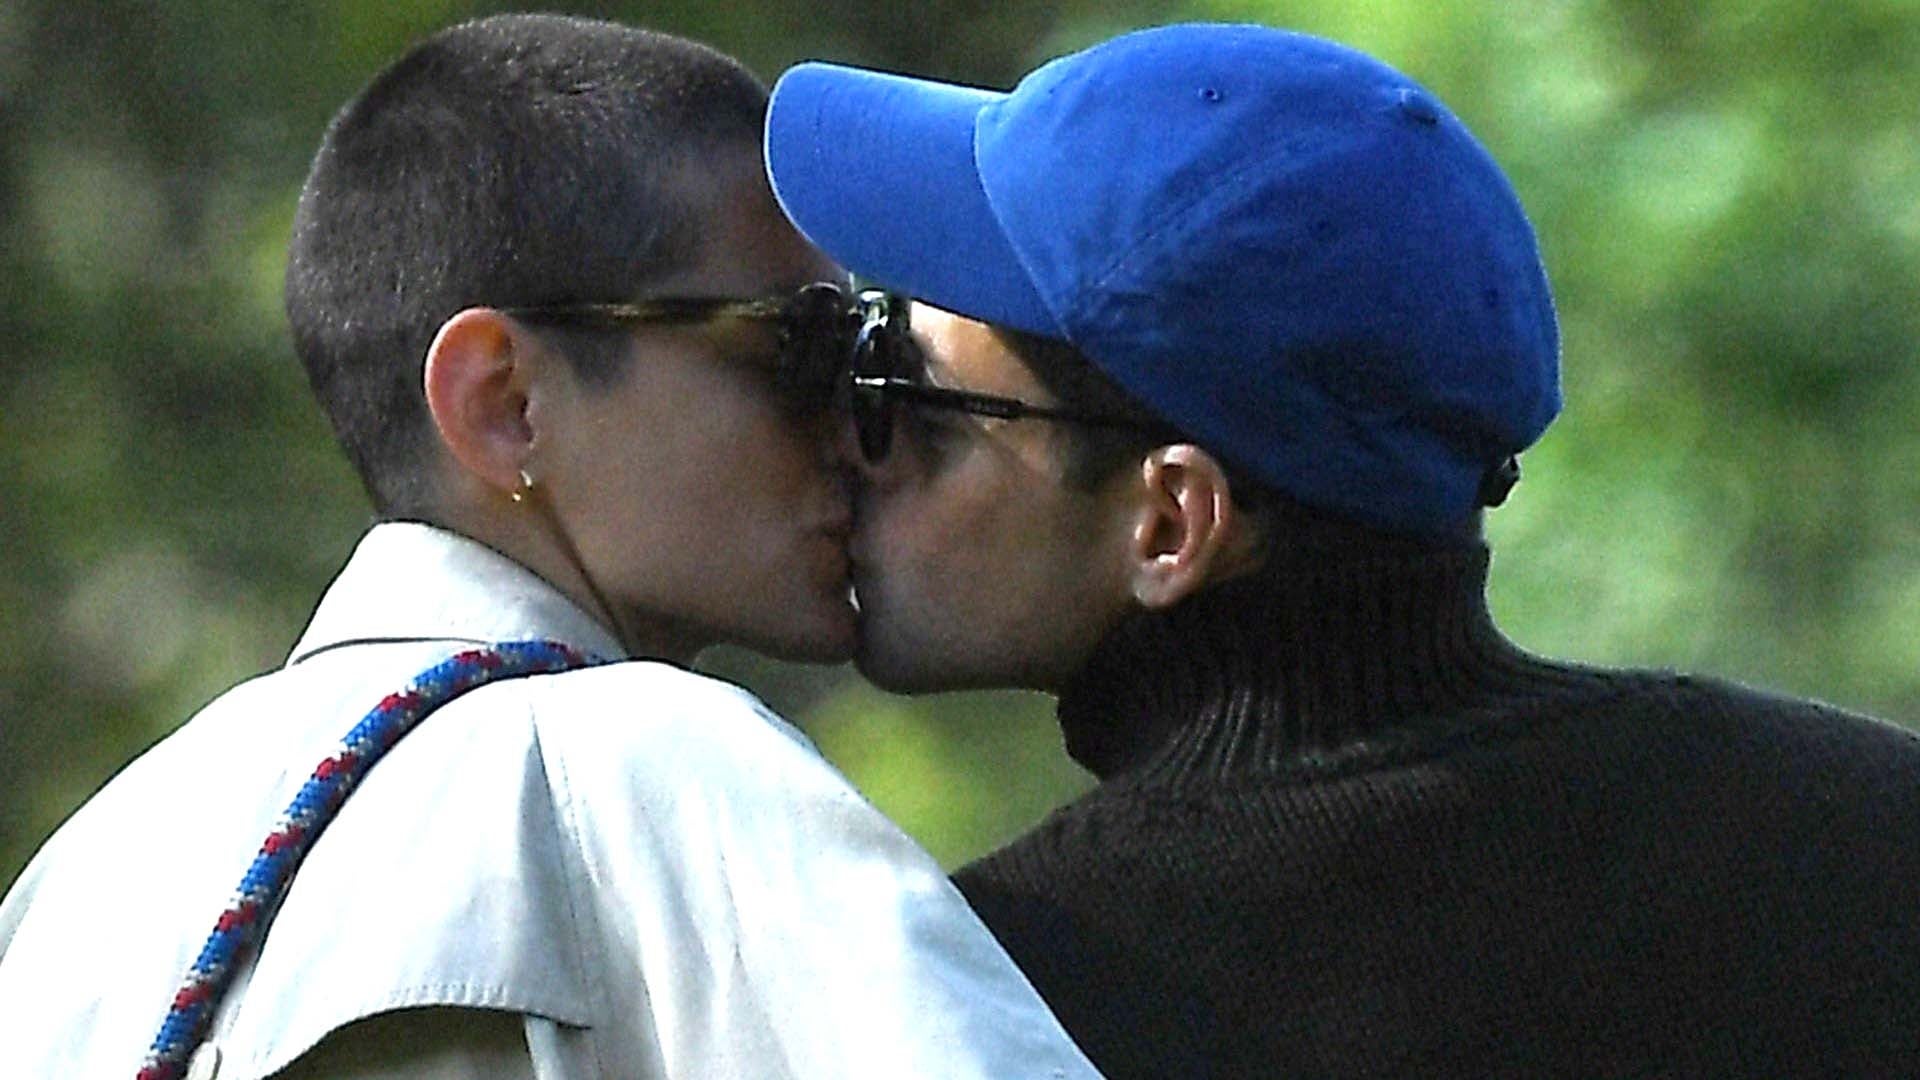 Emma Corrin and Rami Malek Confirm Their Romance With a Kiss!